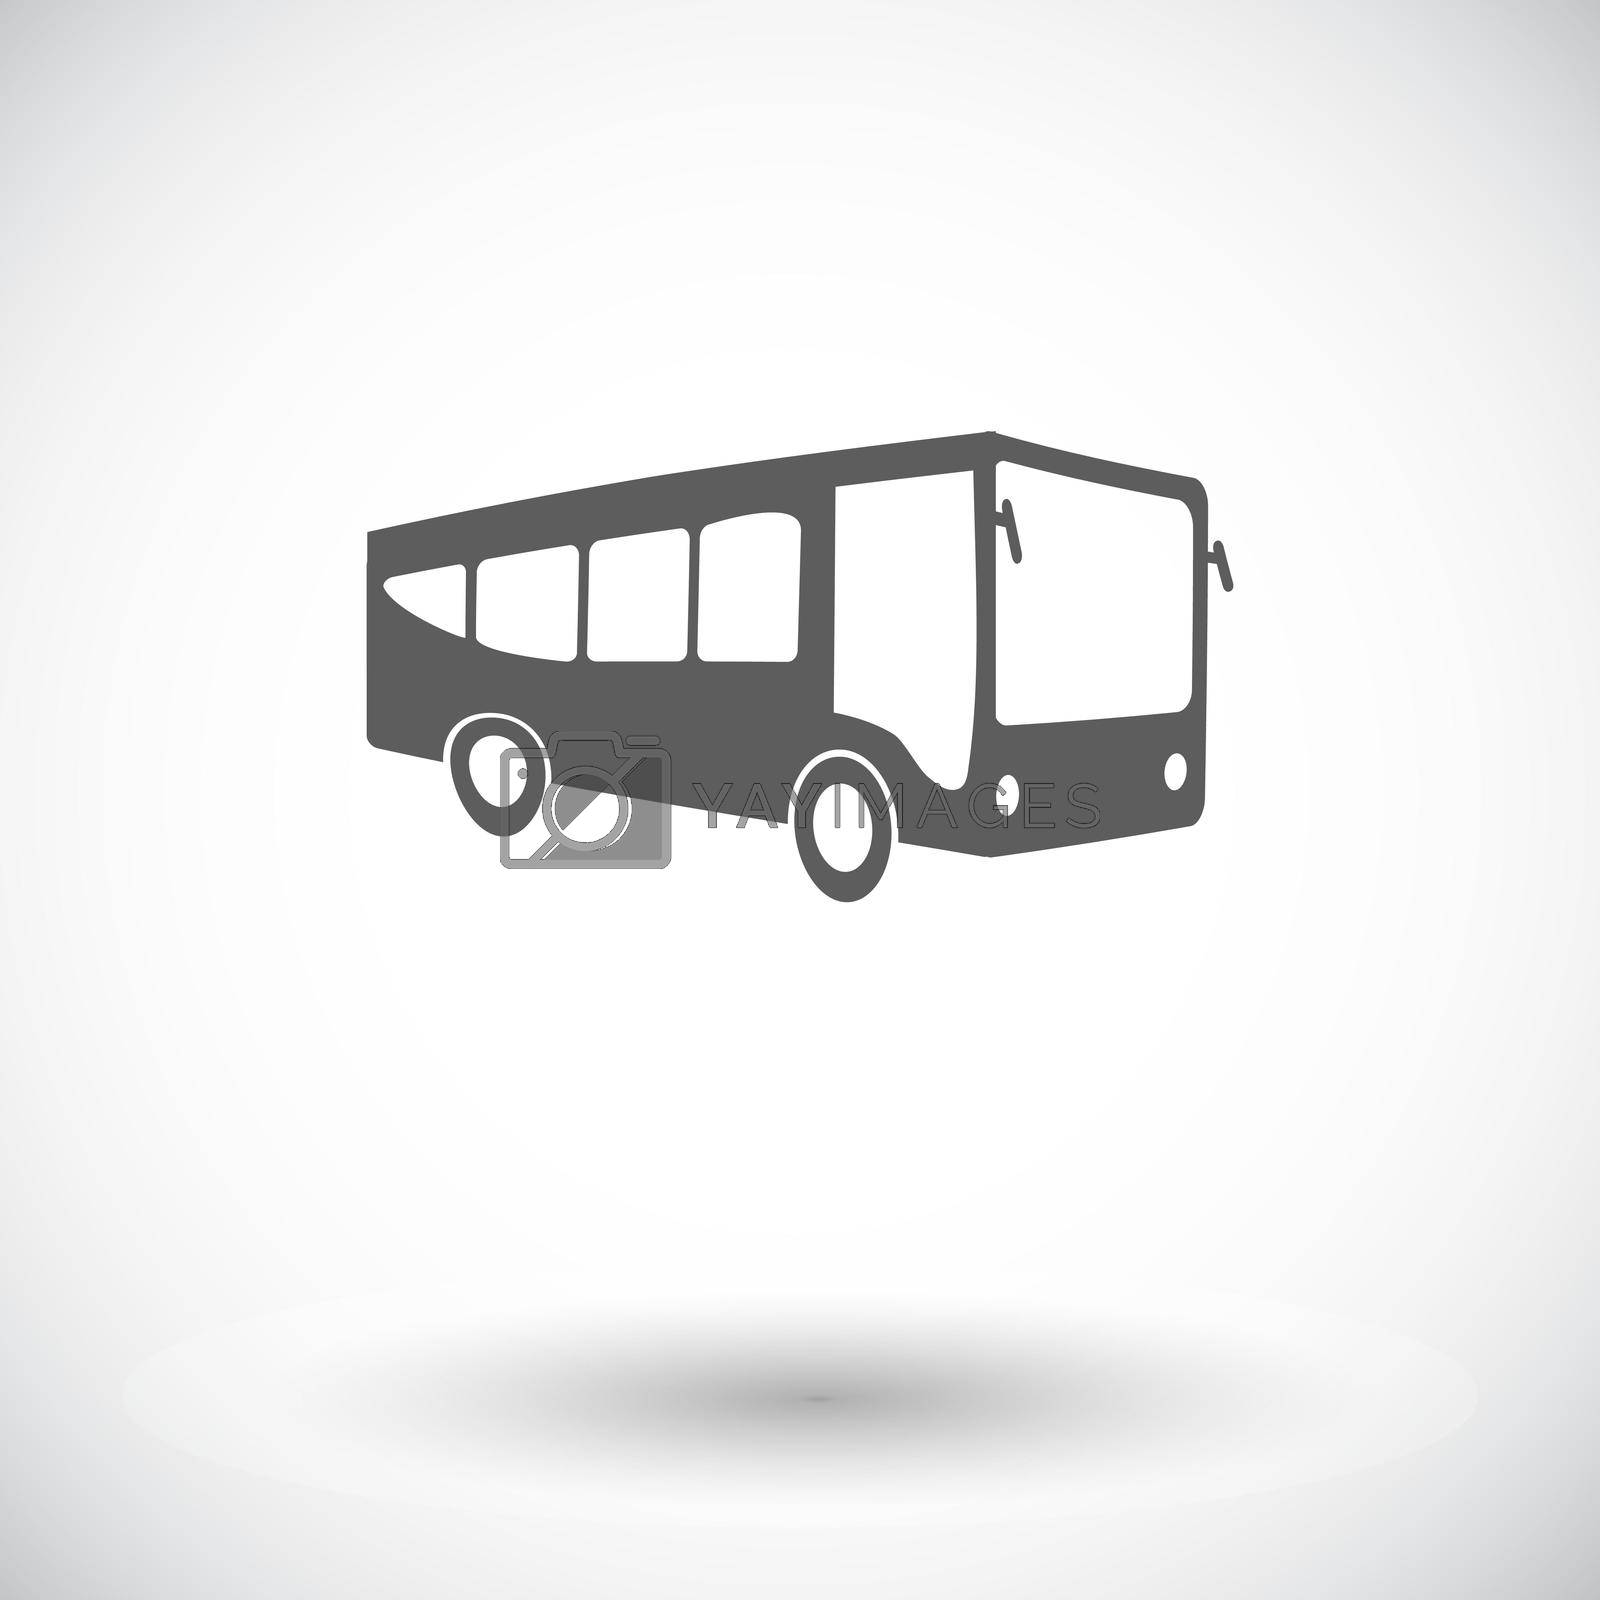 Bus. Single flat icon on white background. Vector illustration.